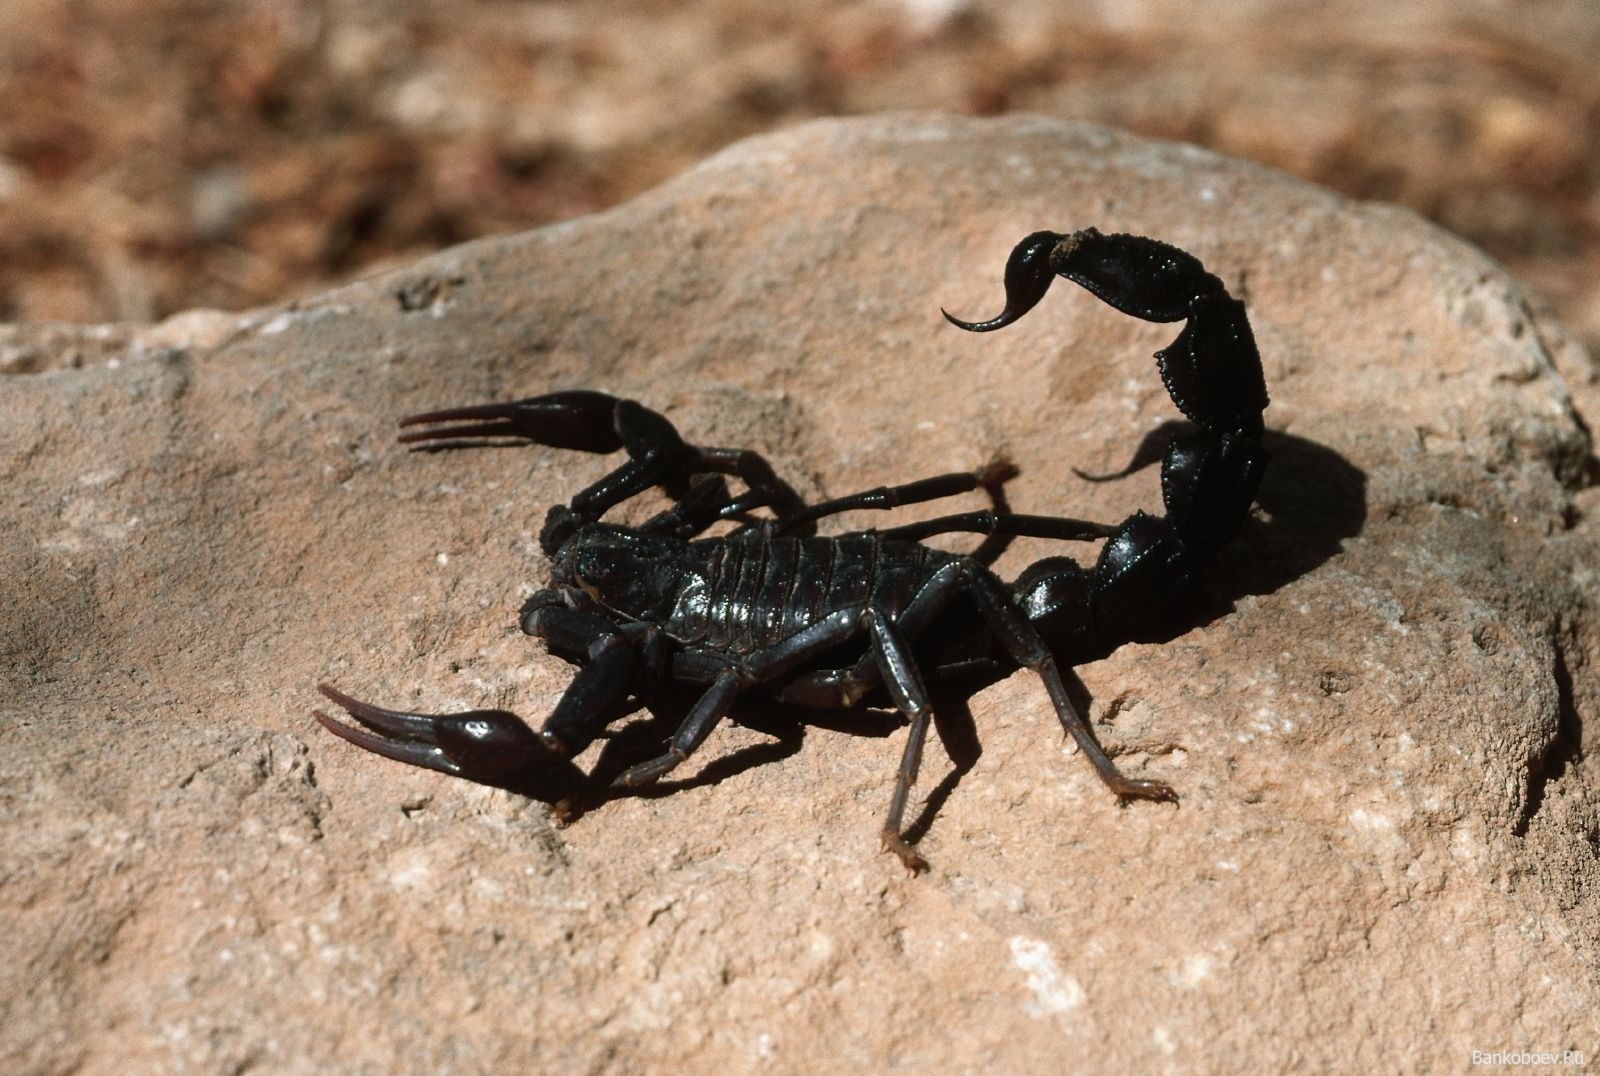 scorpion images wallpaper,scorpion,terrestrial animal,invertebrate,arachnid,arthropod